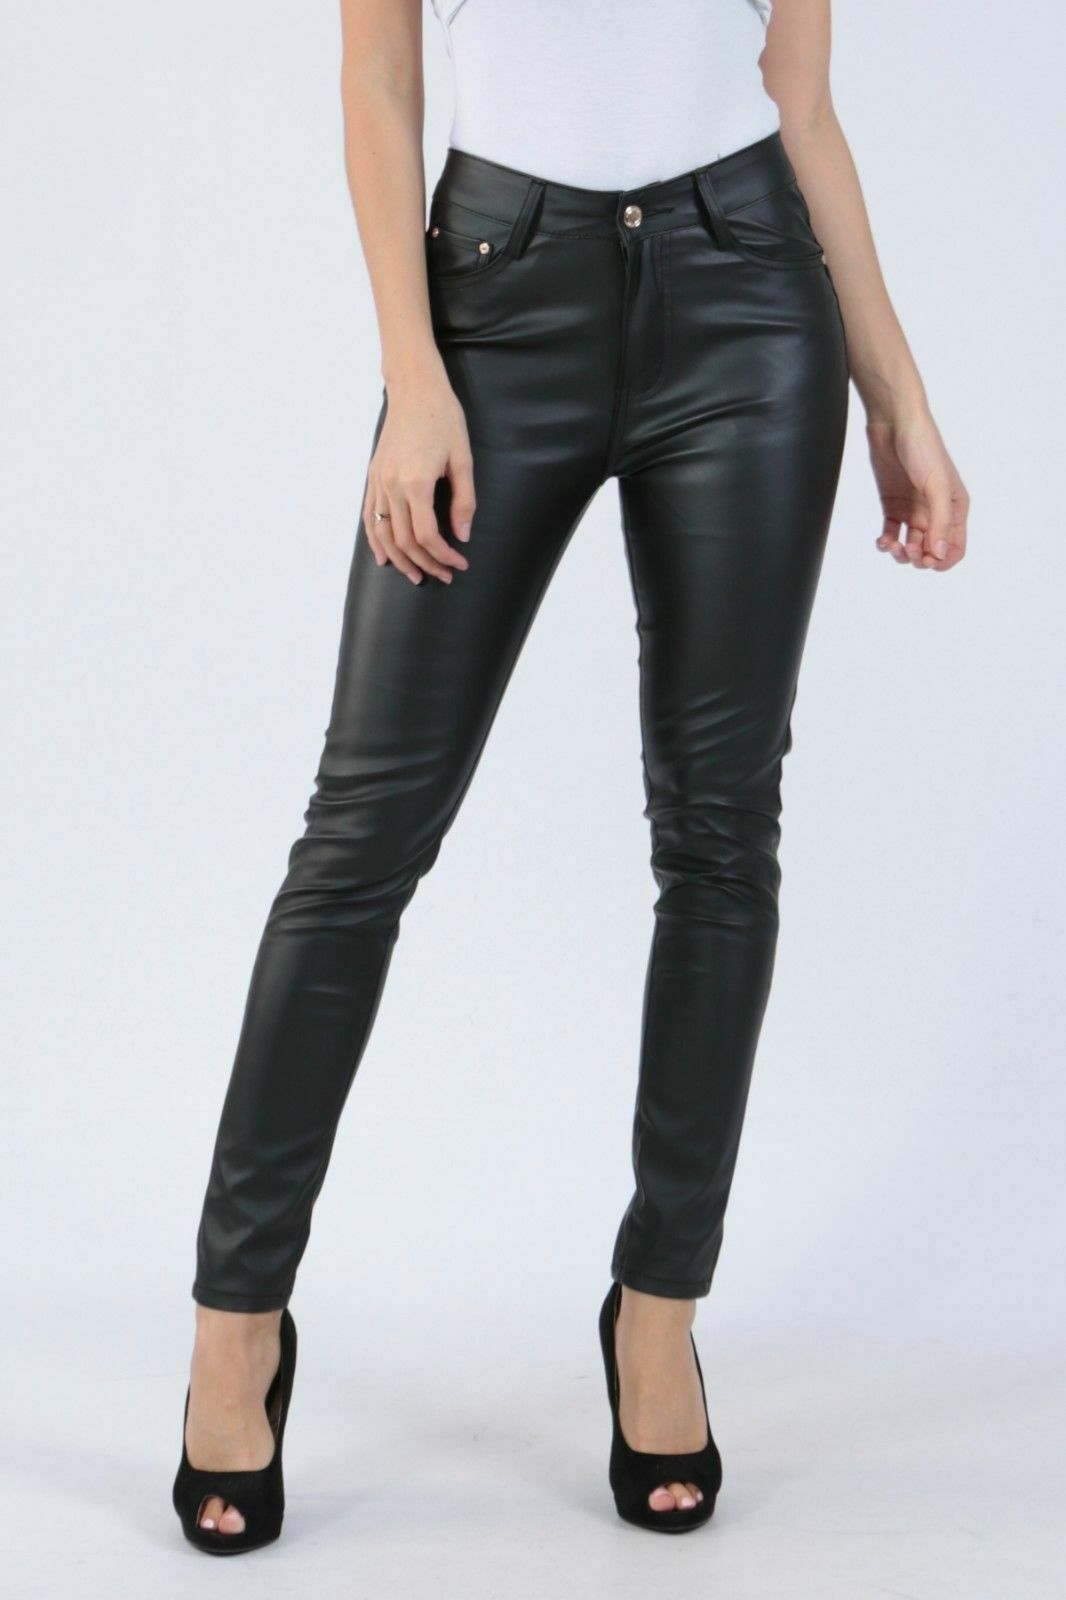 Women's Skinny Slim Faux leather Pants Ladies biker stretch Trousers UK ...